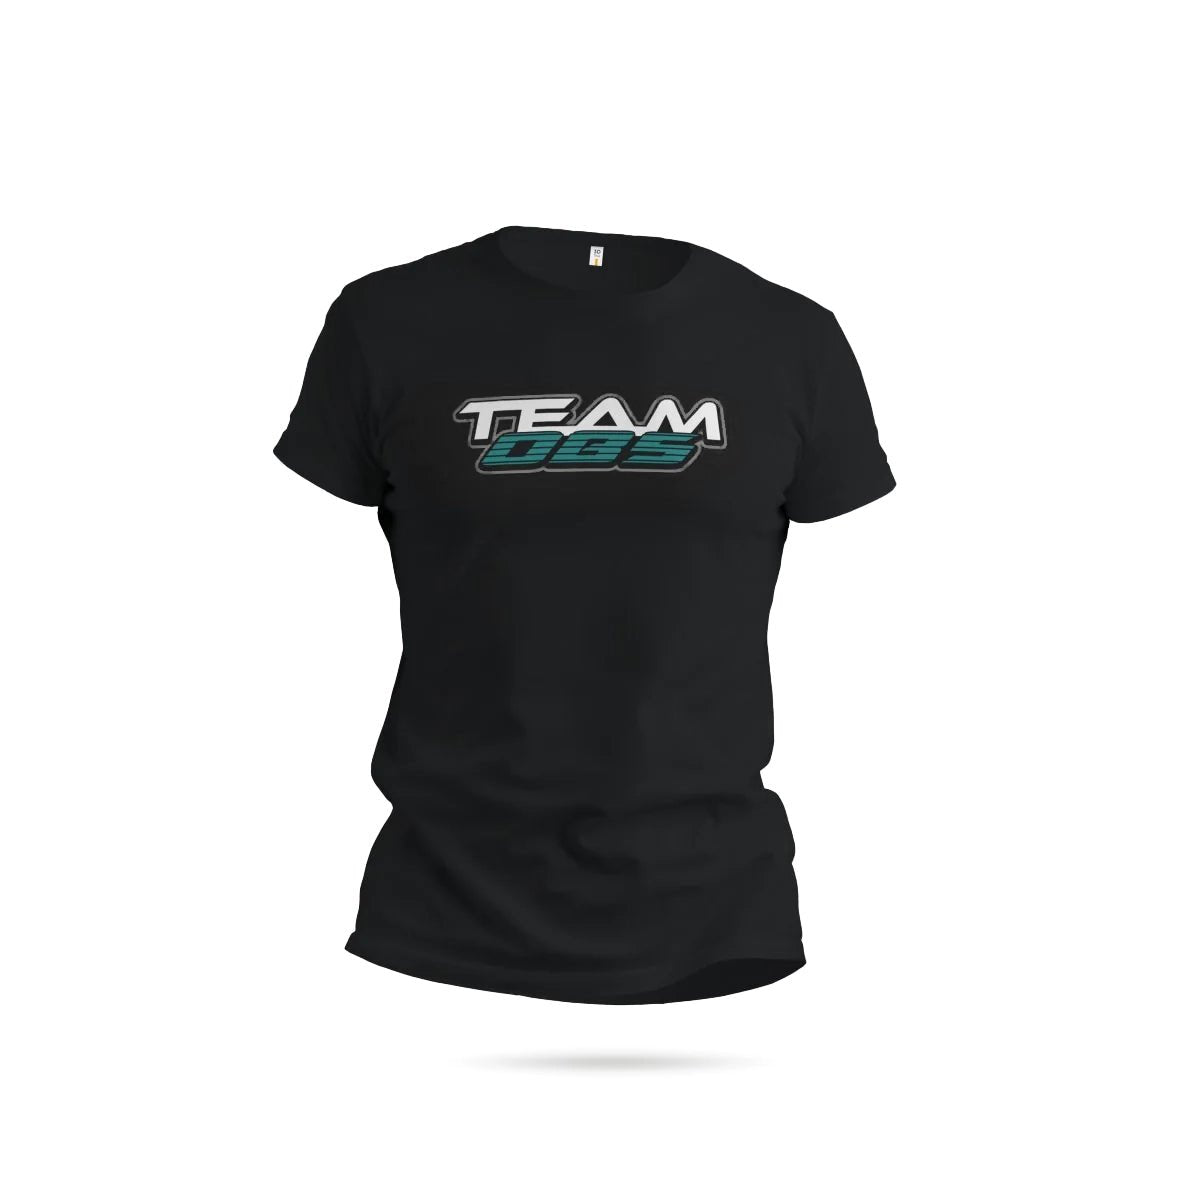 TEAM OBS - Short Sleeve T-Shirt - Teamobs